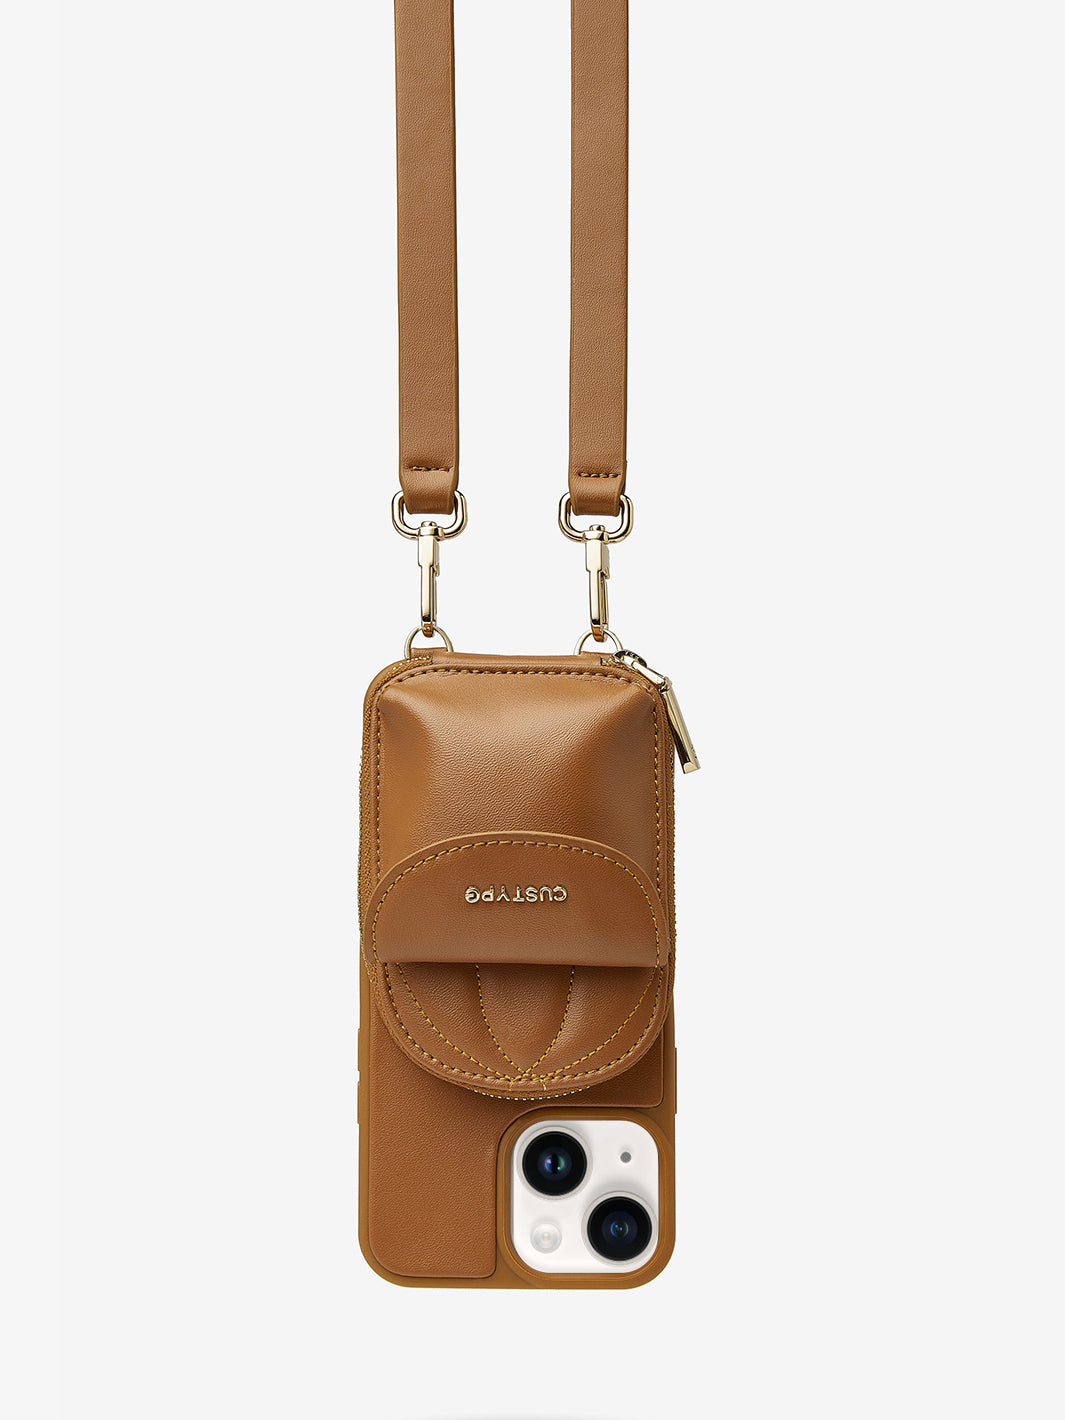 Unique Baseball Cap Phone Case iPhone Crossbody Cover Case Wallet Pouch brown